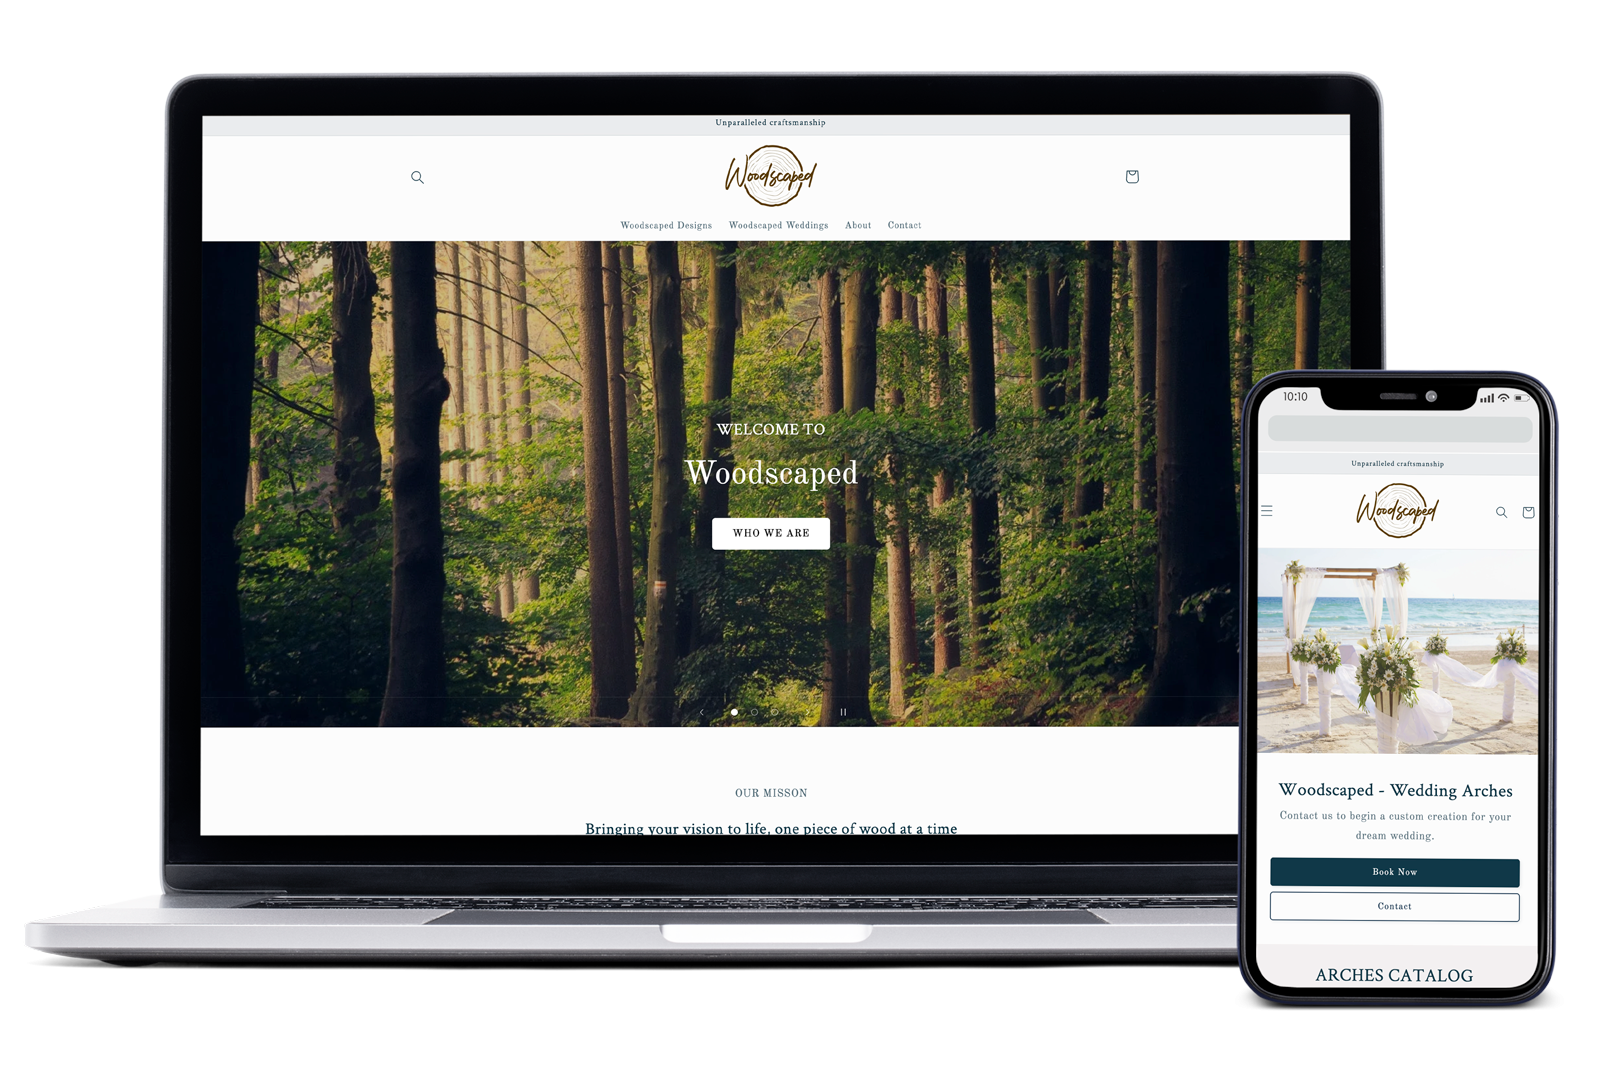 woodscaped weddings company website design mockup